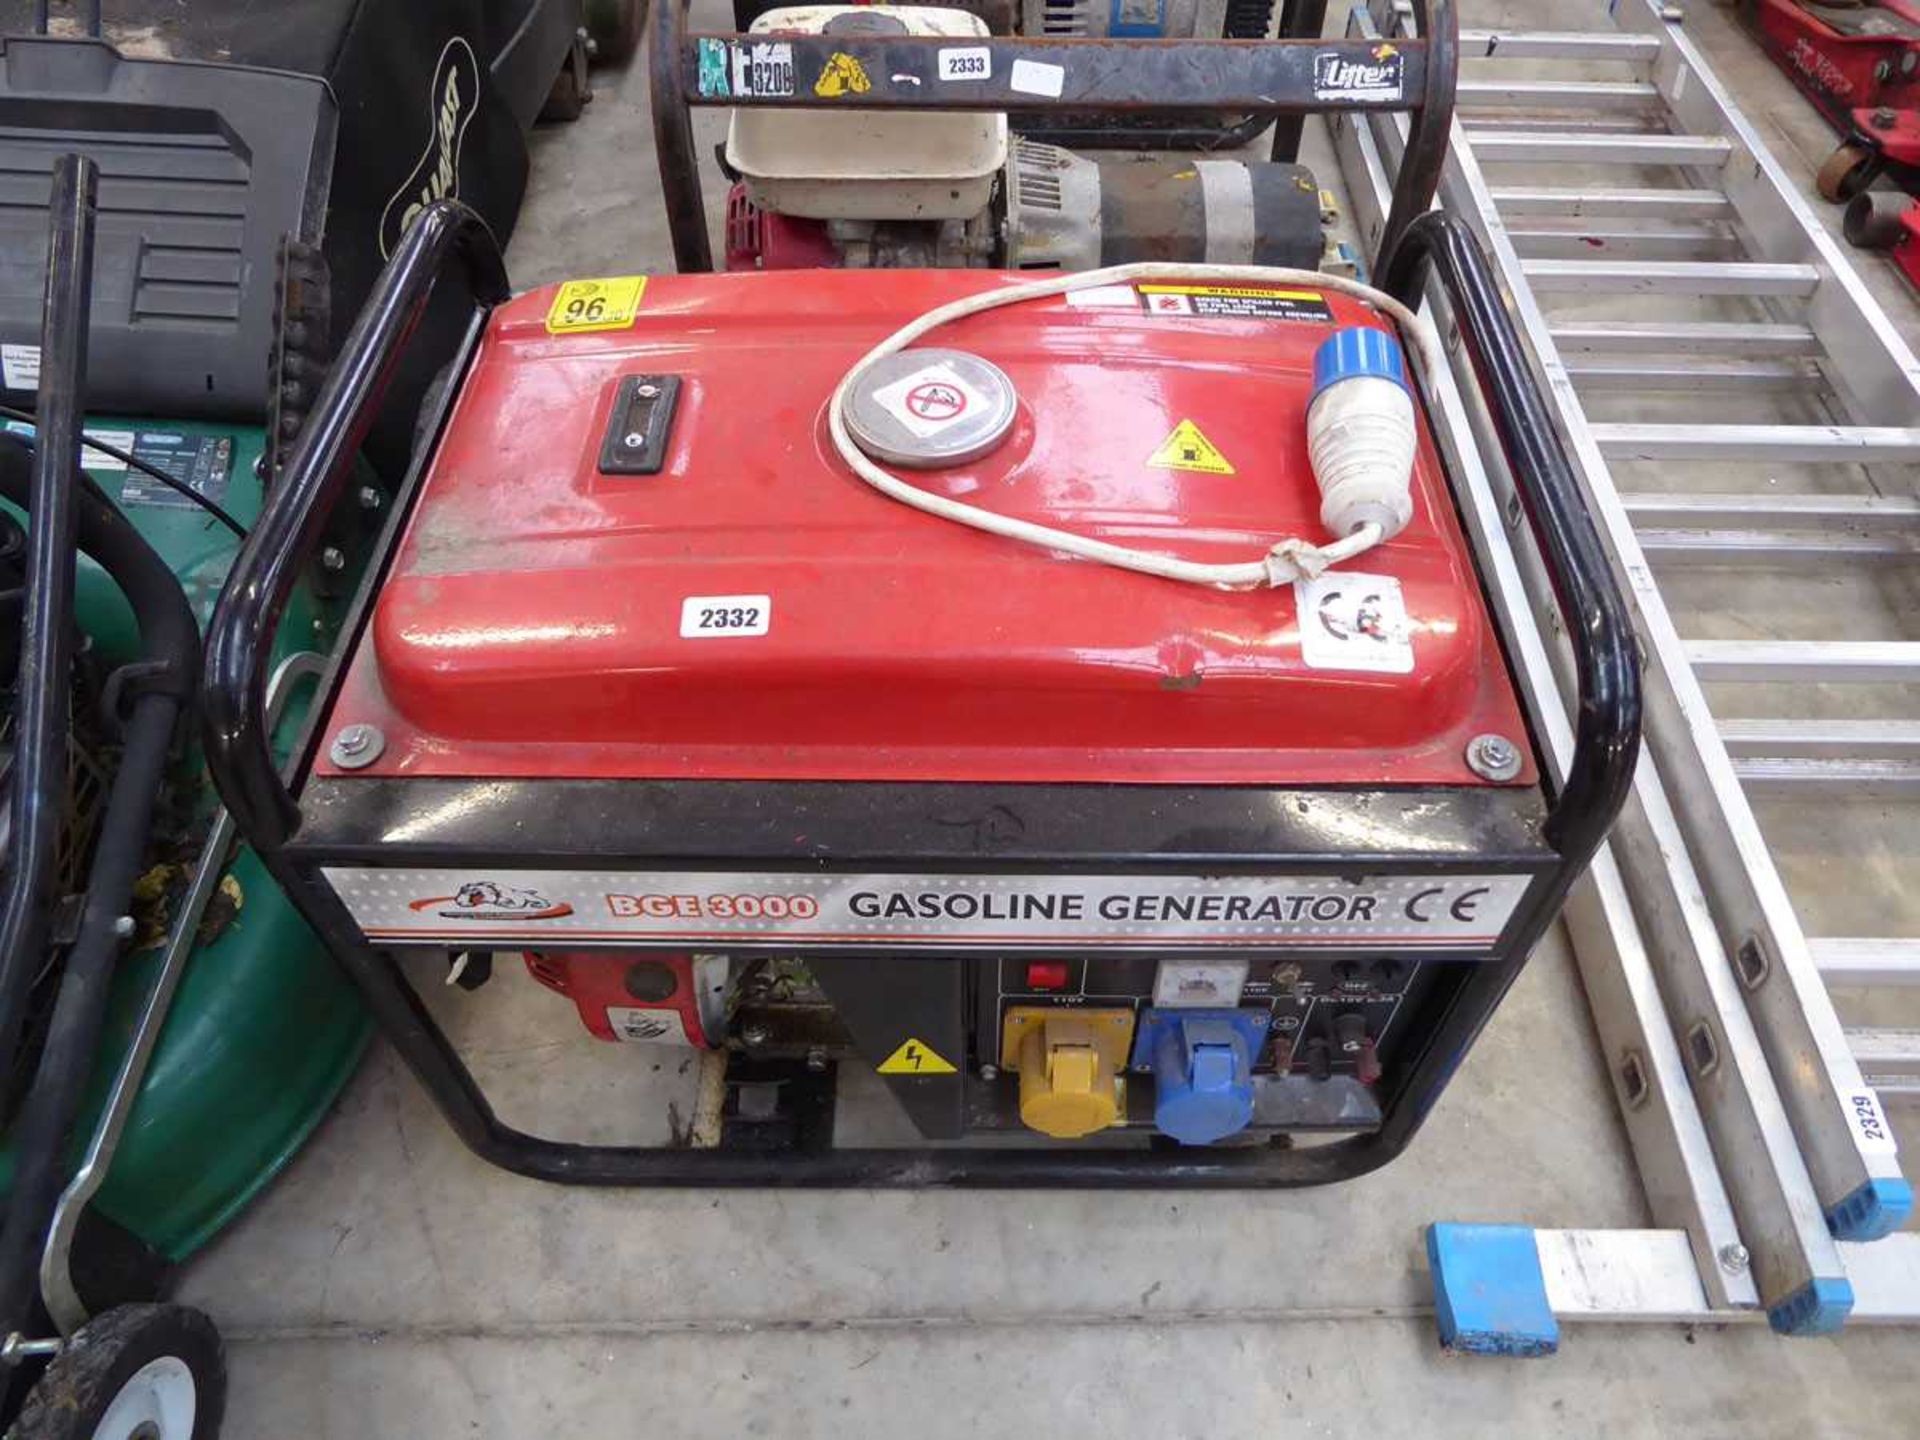 BGE 3000 petrol generator